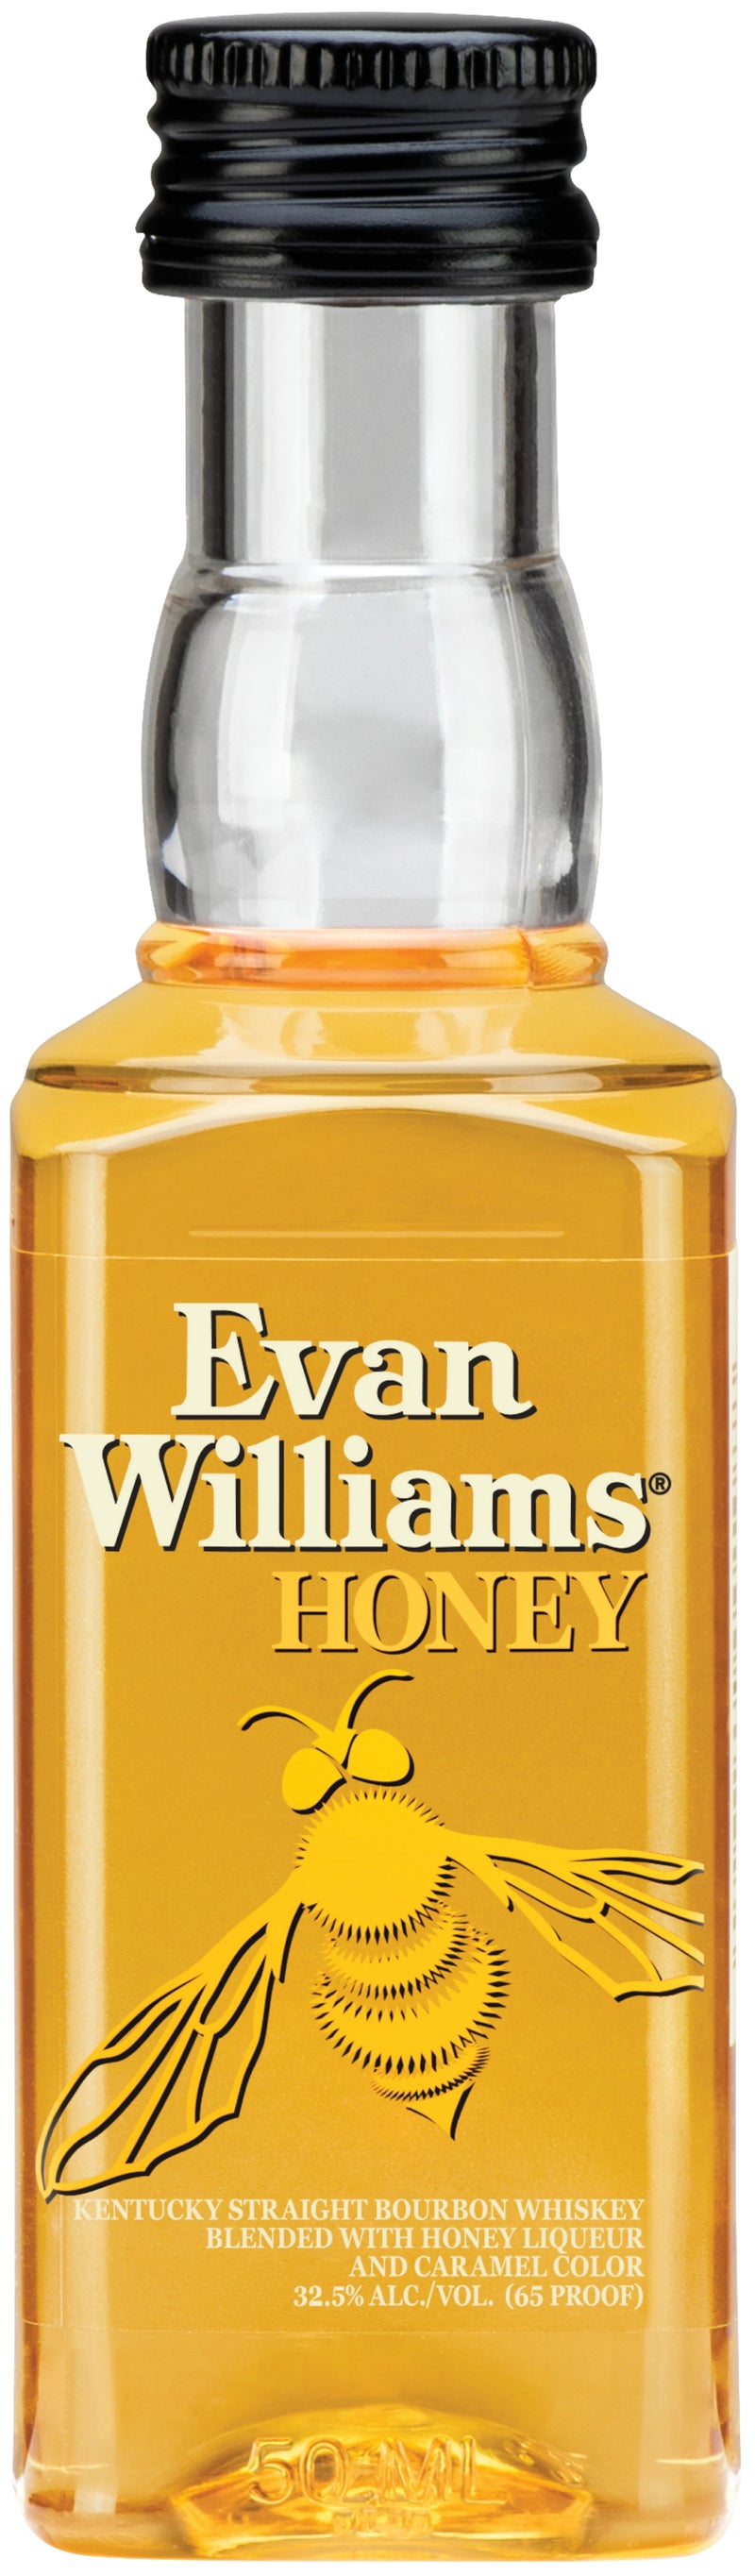 EVAN WILLIAMS HONEY PL 50ML SLEEVE (10 BOTTLES)